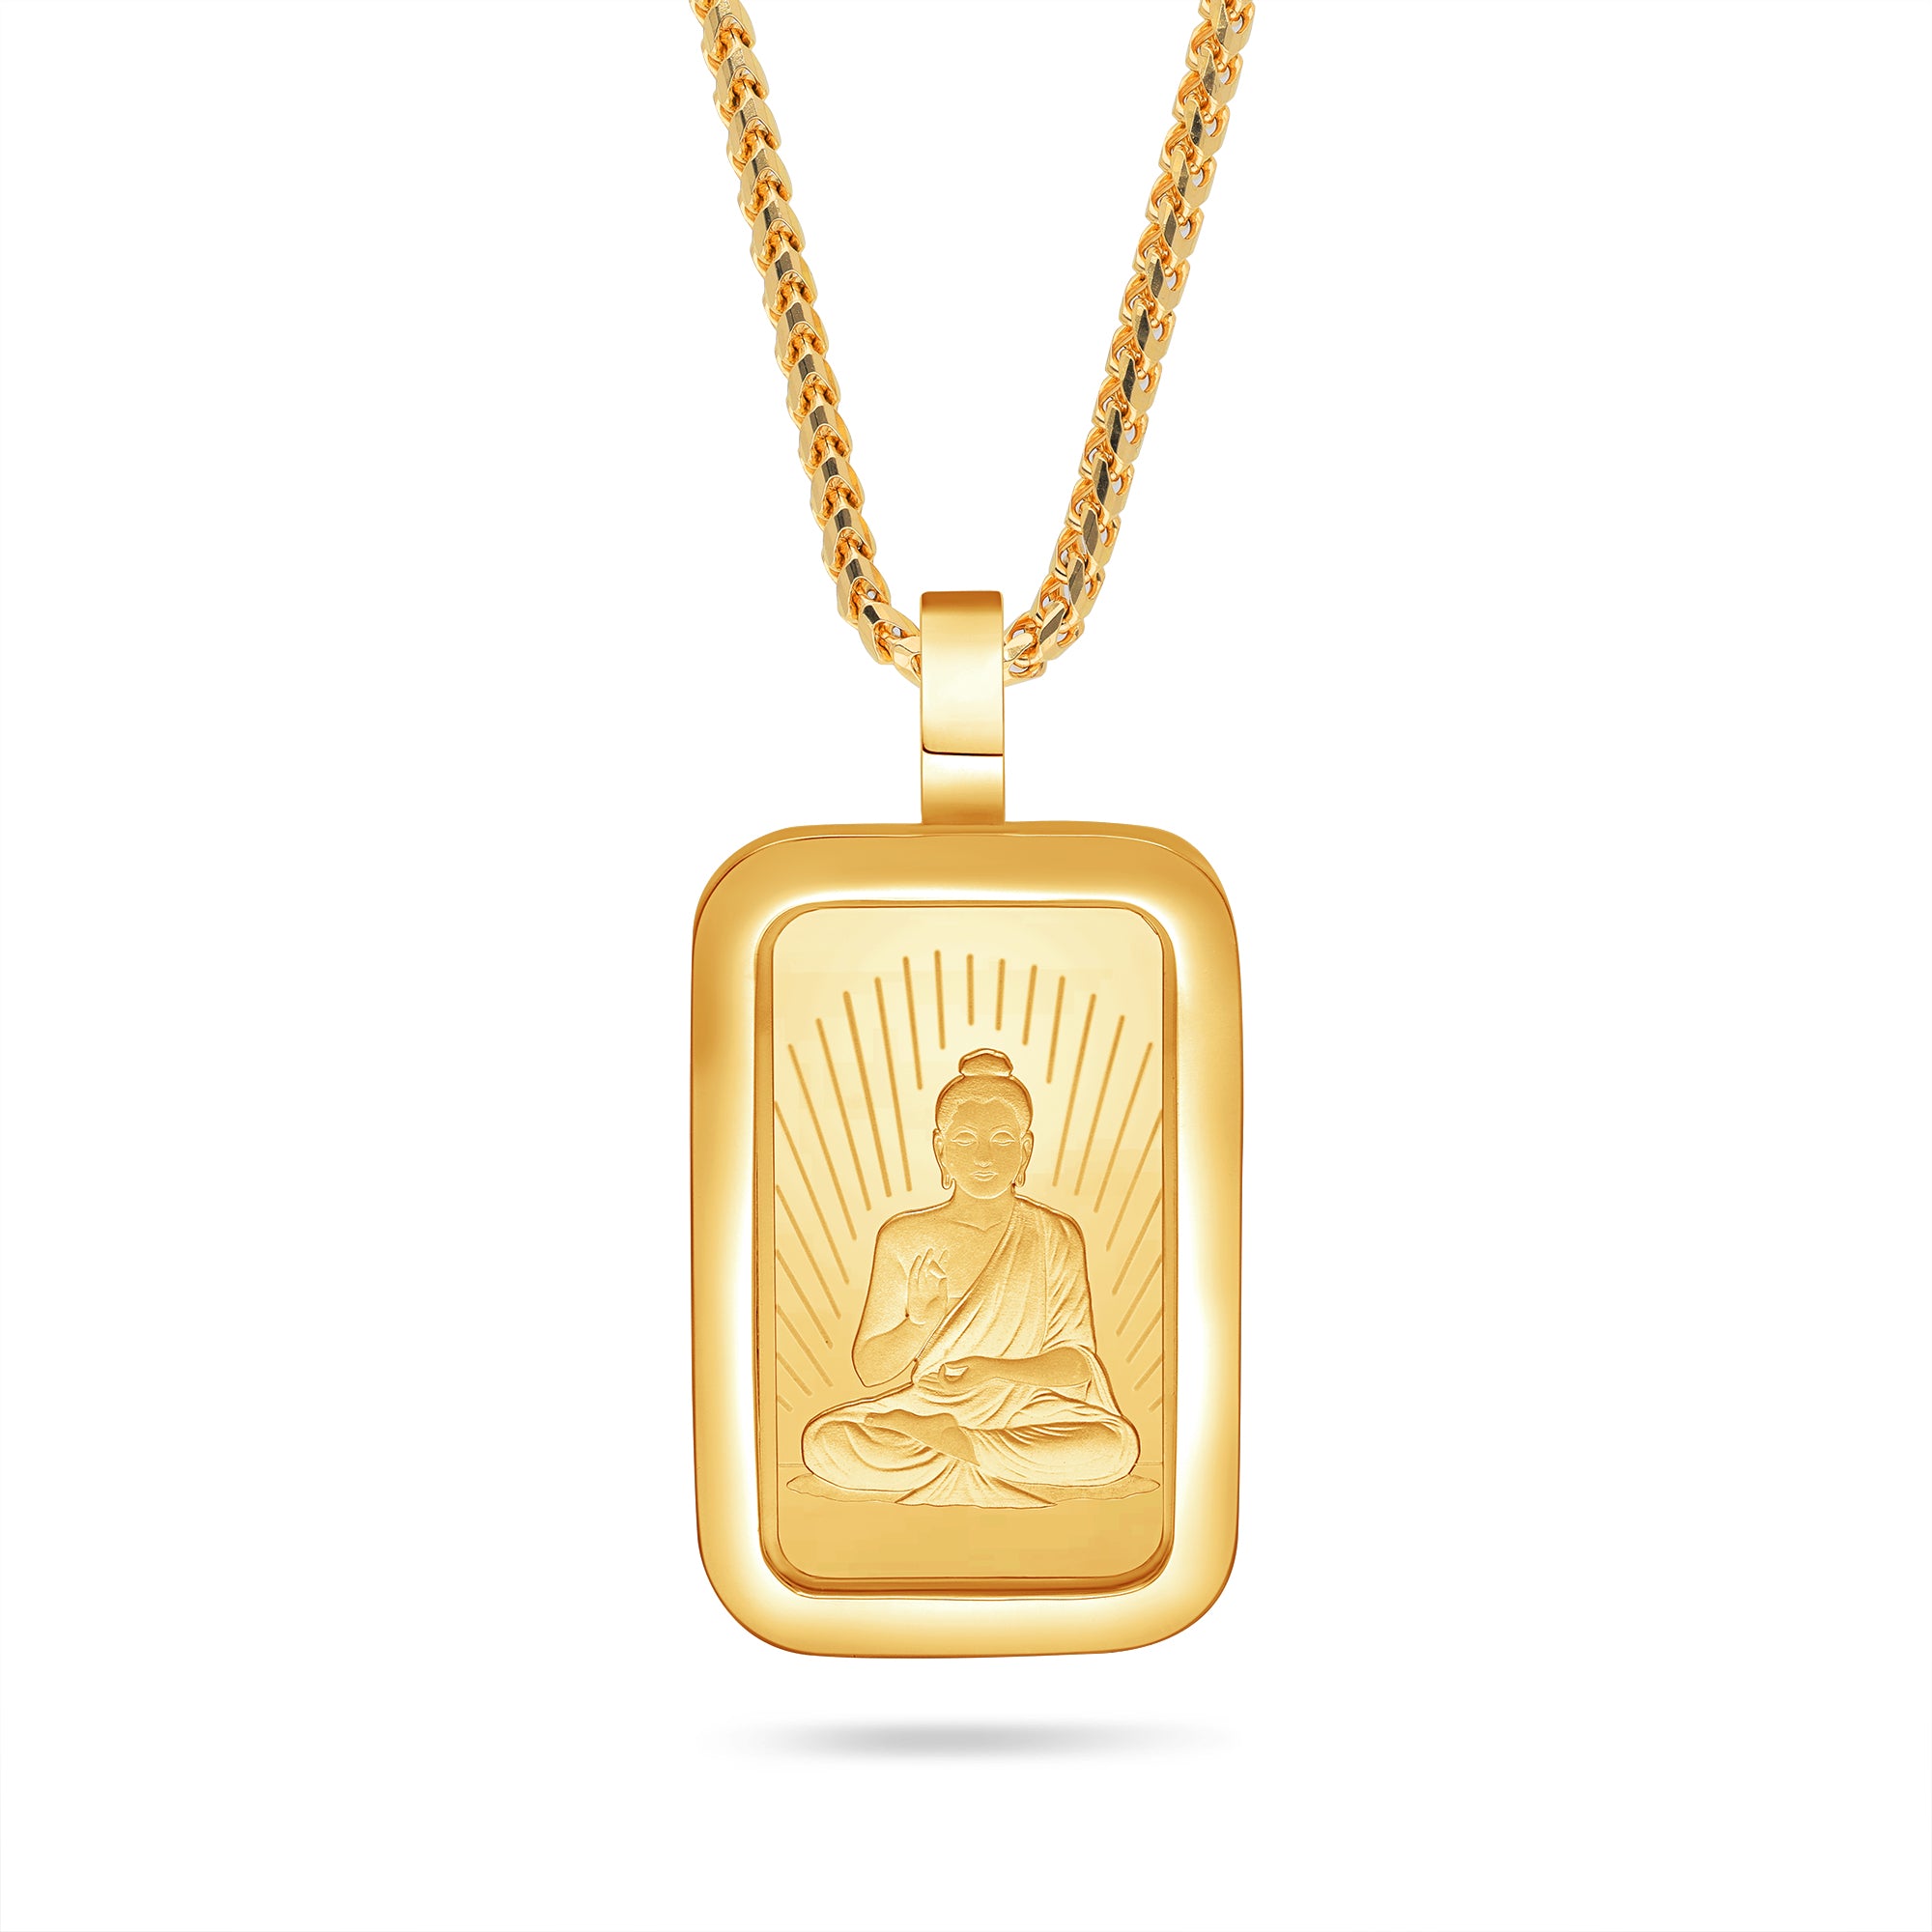 Standard 1oz. Suisse Gold Bar (Sitting Buddha, Solid Gold Bezel)